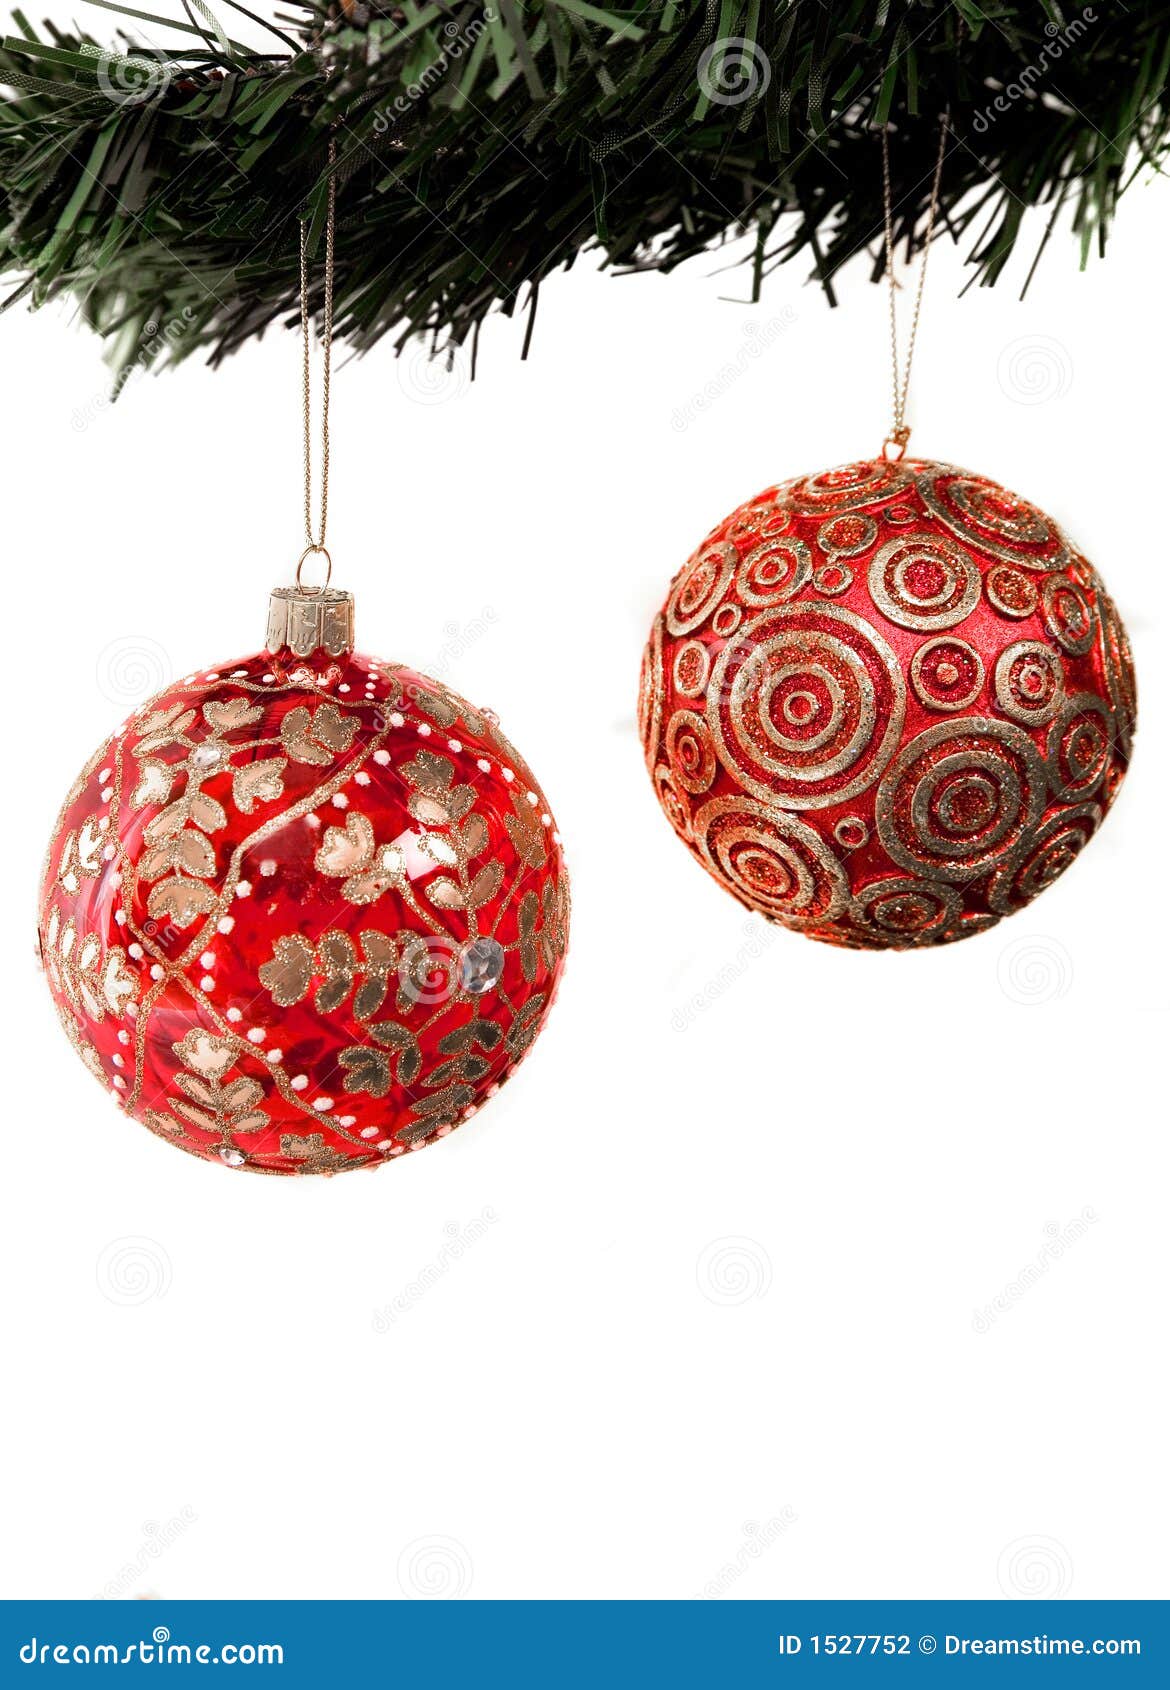 christmas-balls-hanging-xmas-tree-1527752.jpg